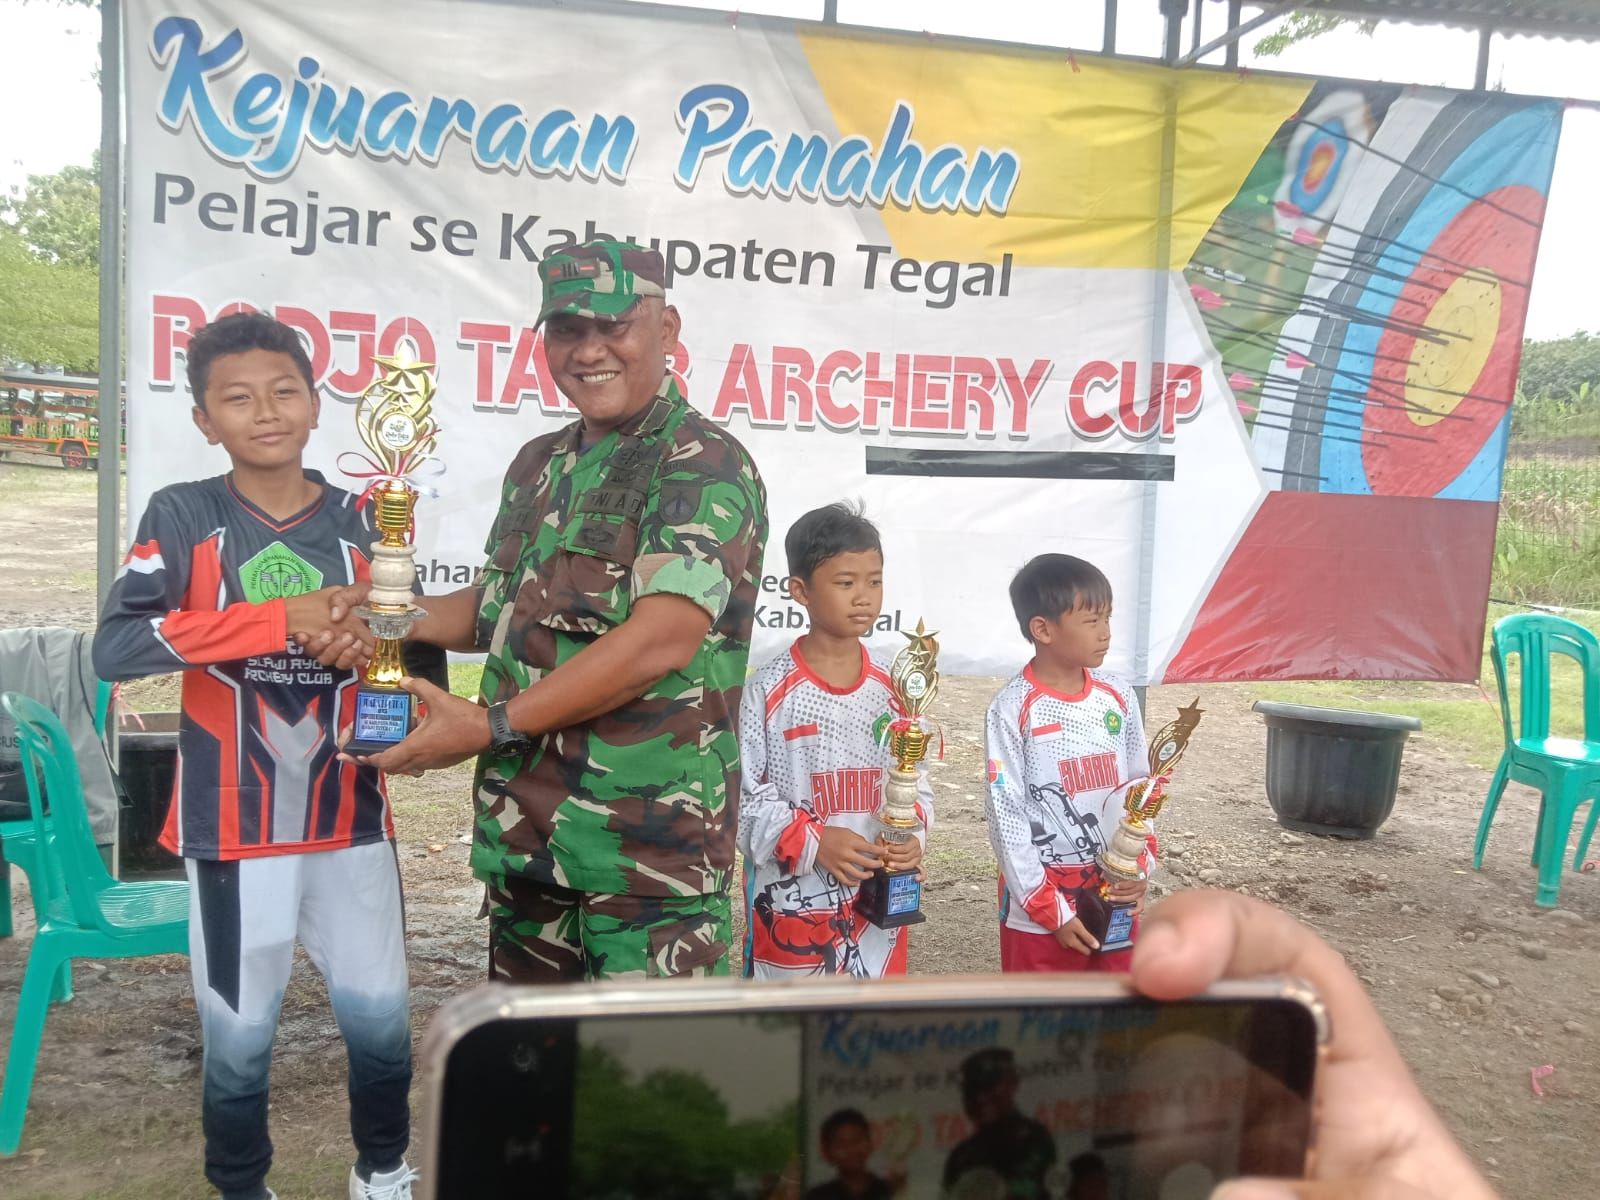 Peserta Juara Rodjo Tater Archery Cup